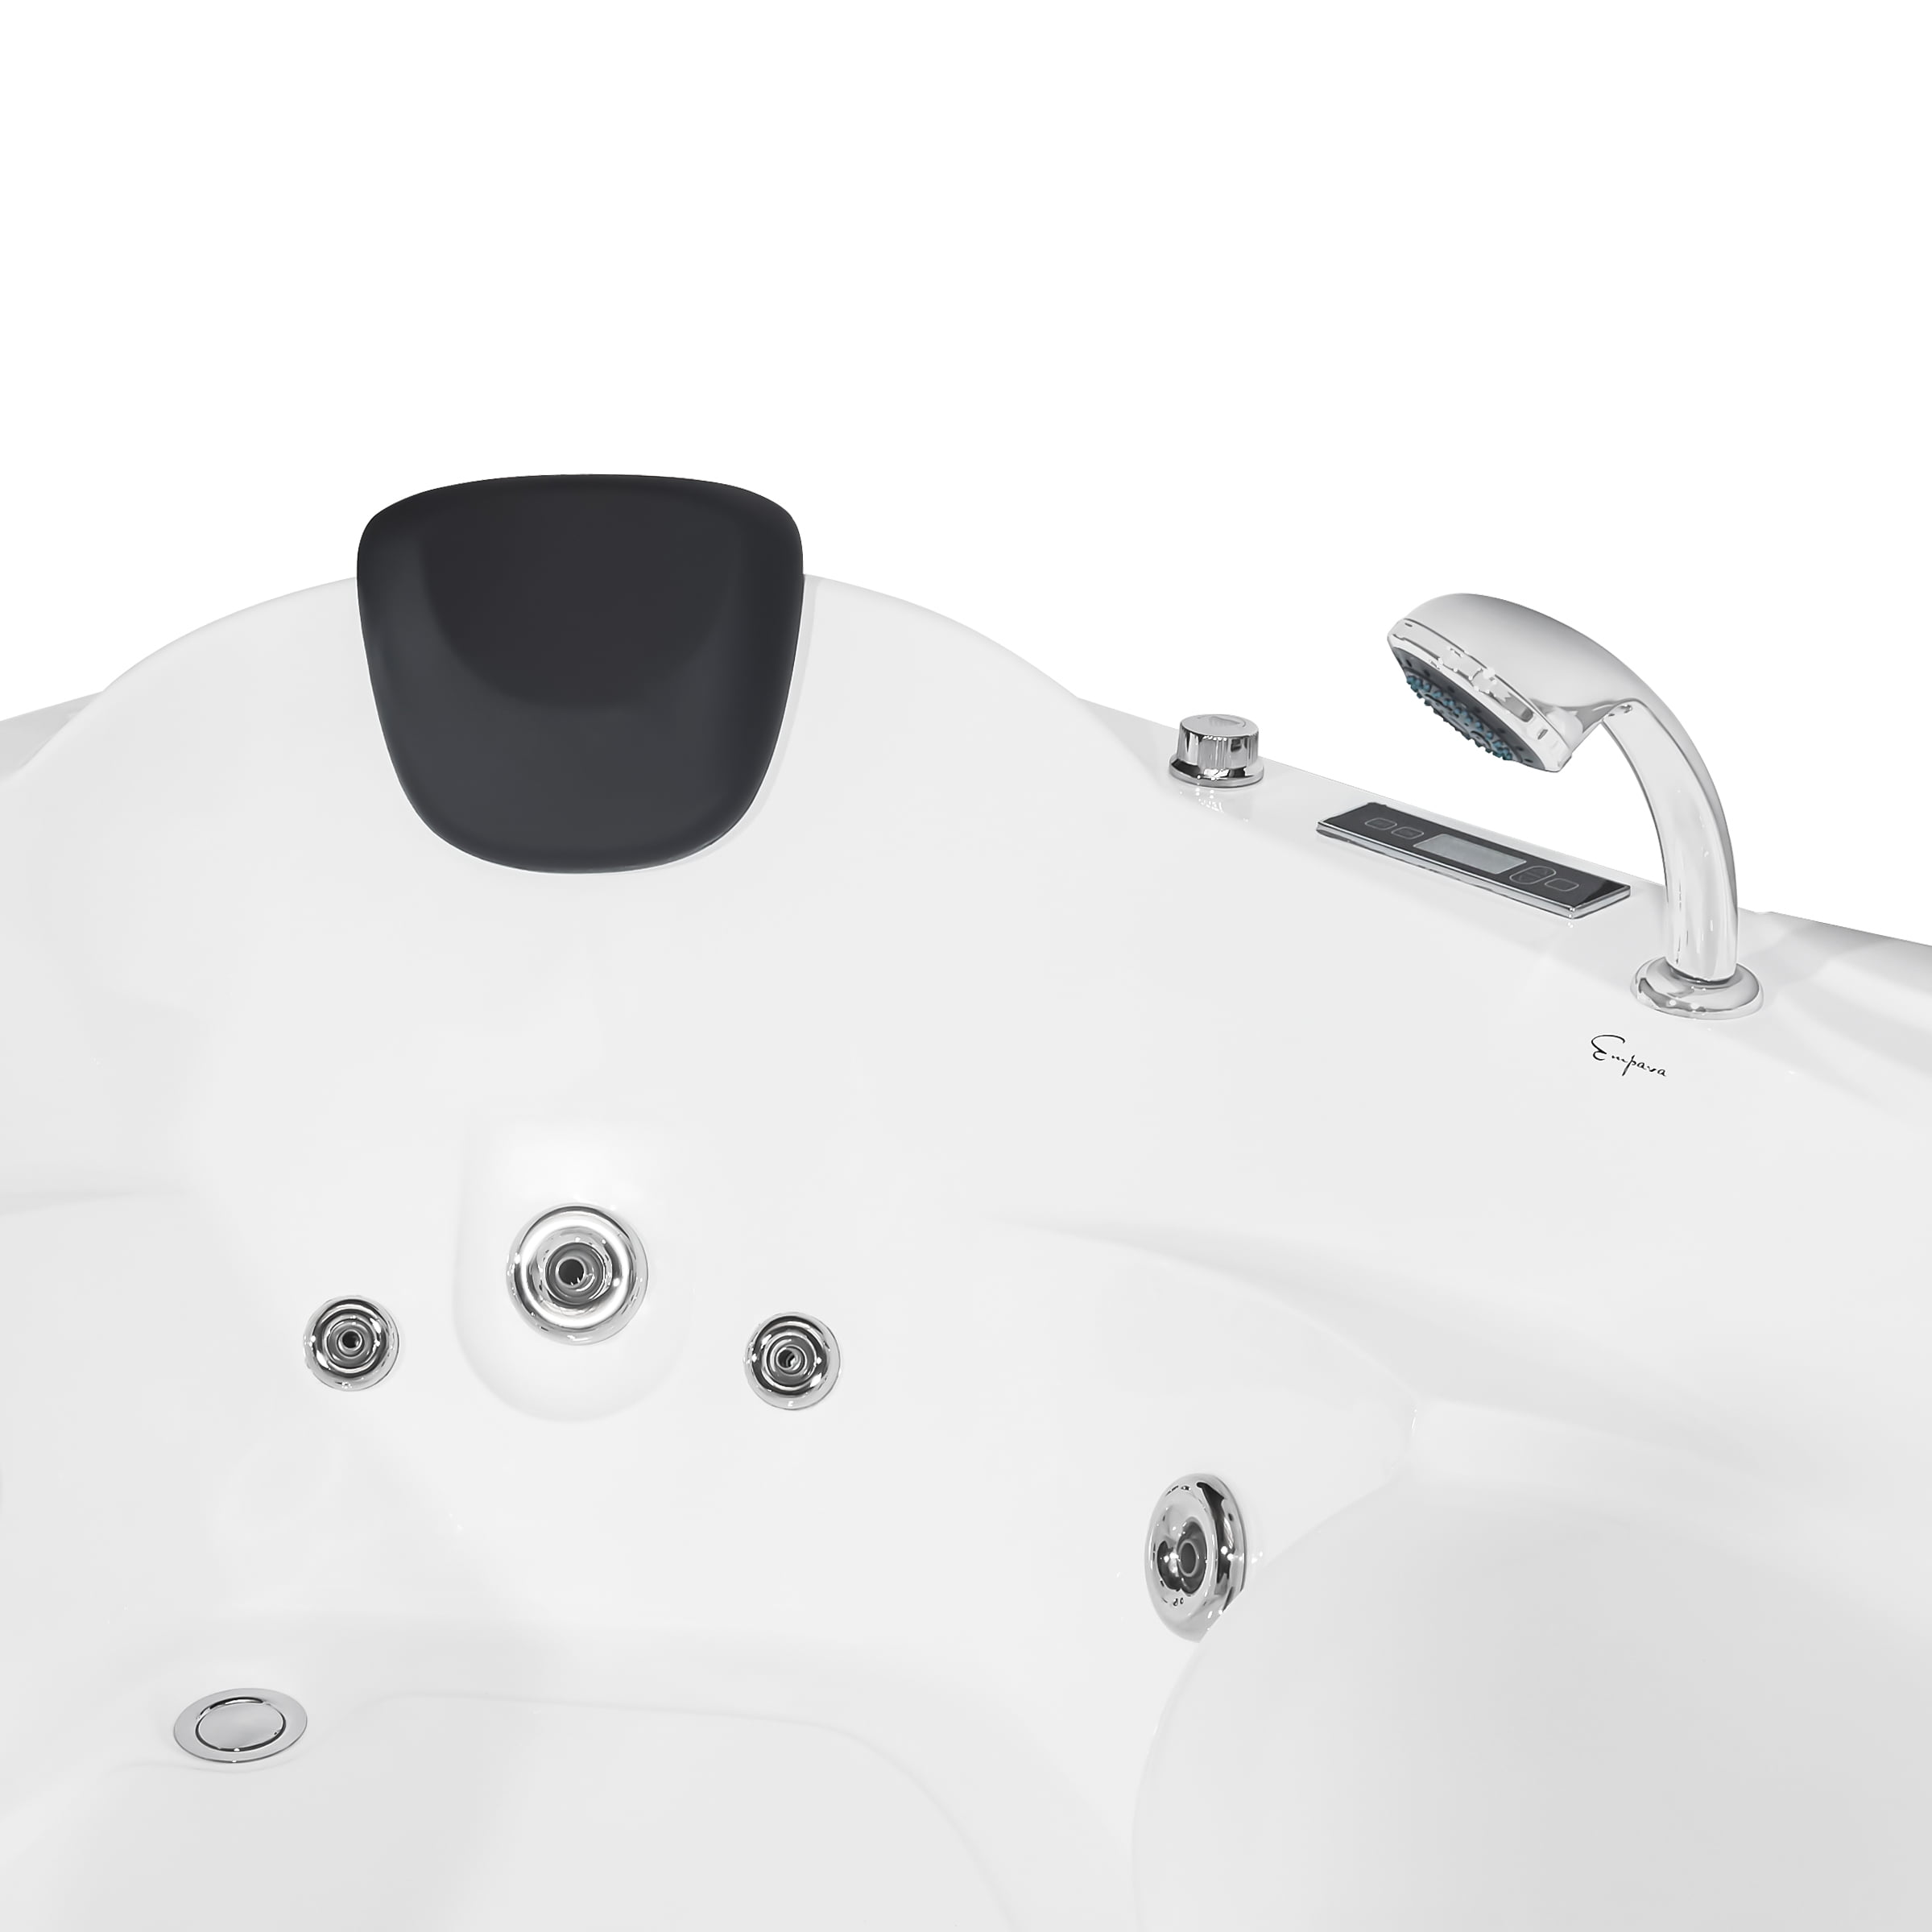 BodyHealt Portable whirlpool Jet Spa Bath - With Adjustable Swivel Jet, 2  levels Home Spa for Bathtub